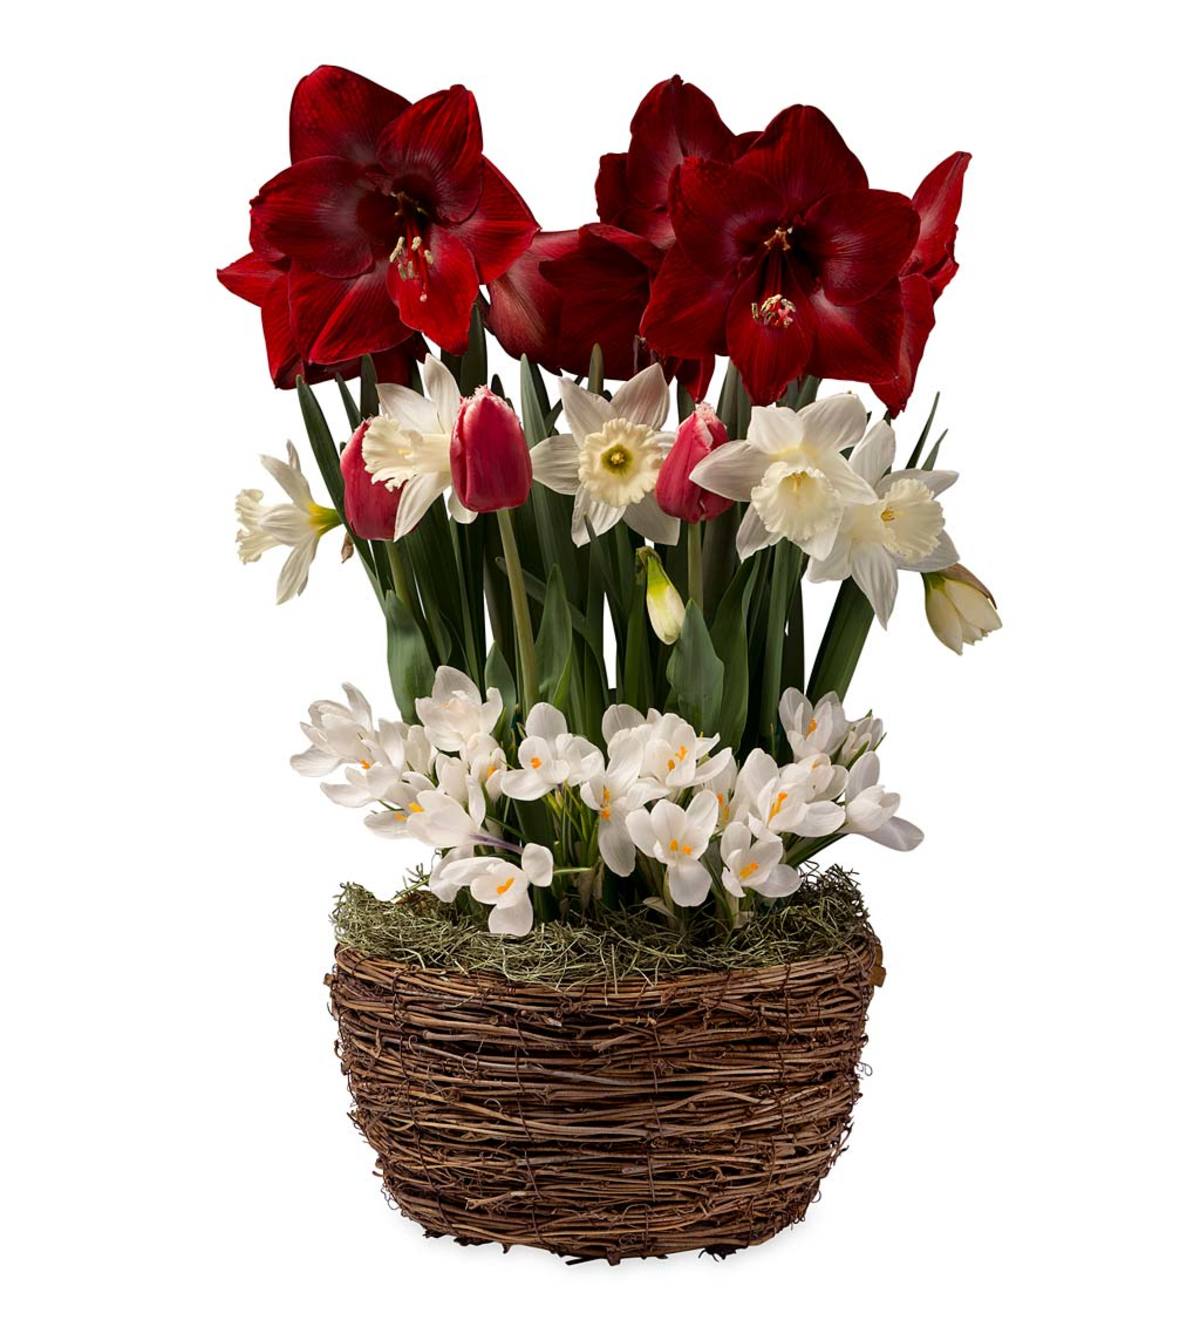 Assorted Dutch Flower Bulb Holiday Gift Garden | Plow & Hearth